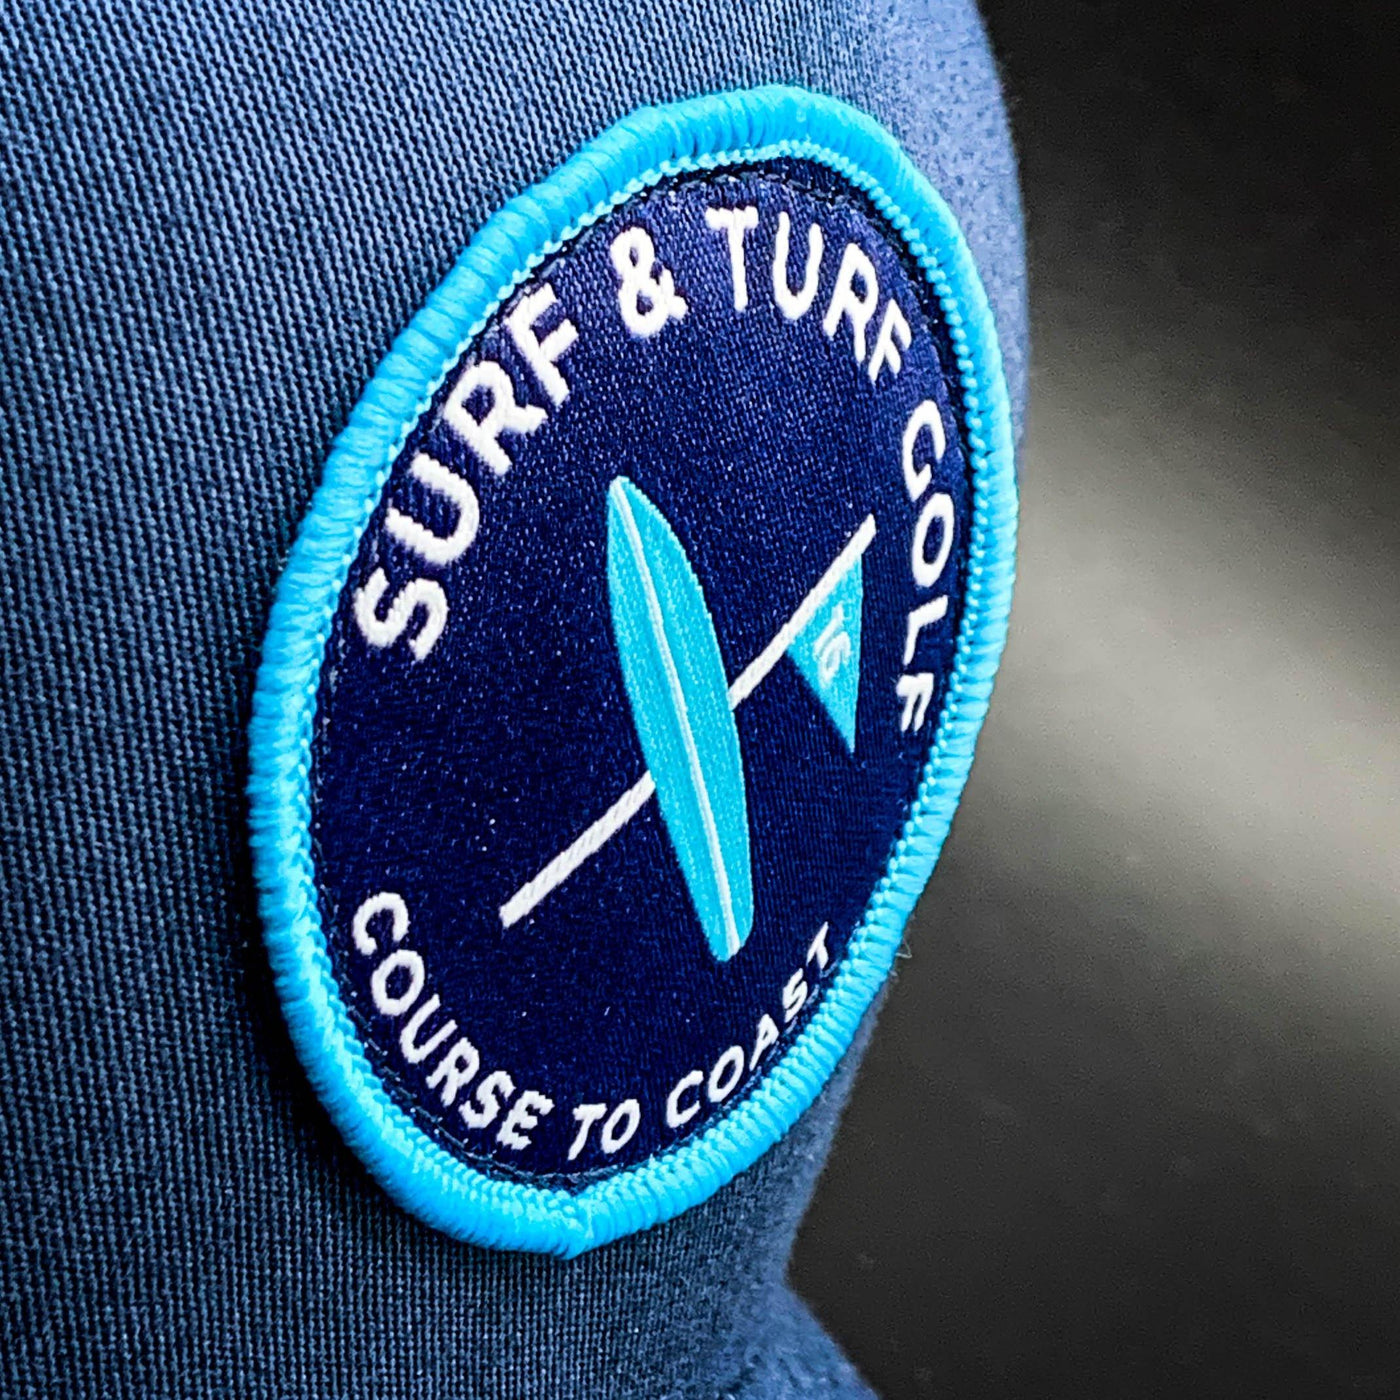 Course to Coast 9 - Surf & Turf Golf